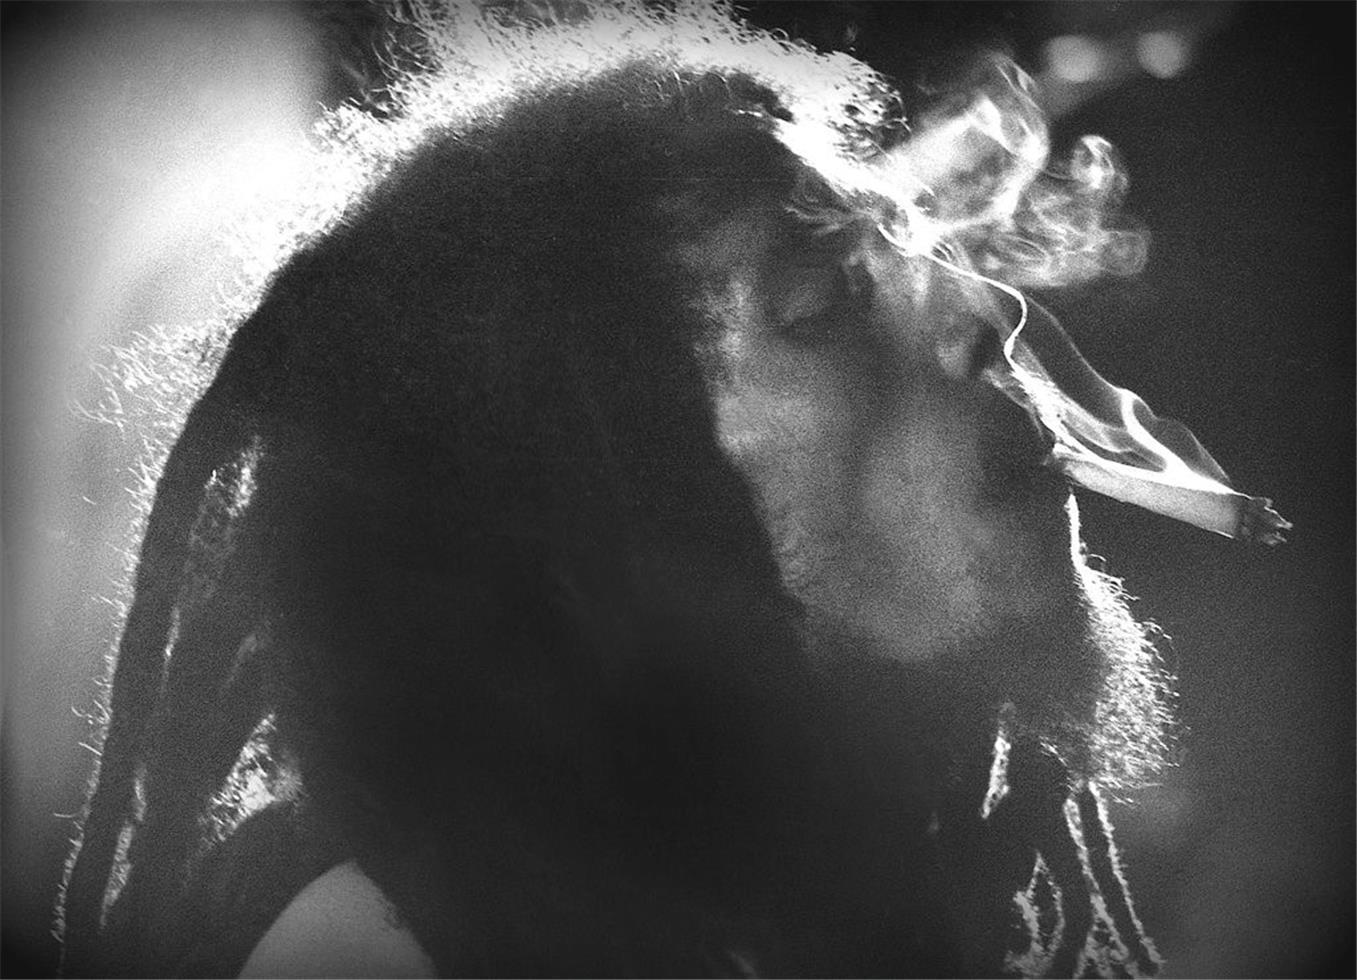 Peter Simon Portrait Photograph - Bob Marley "Smoke"